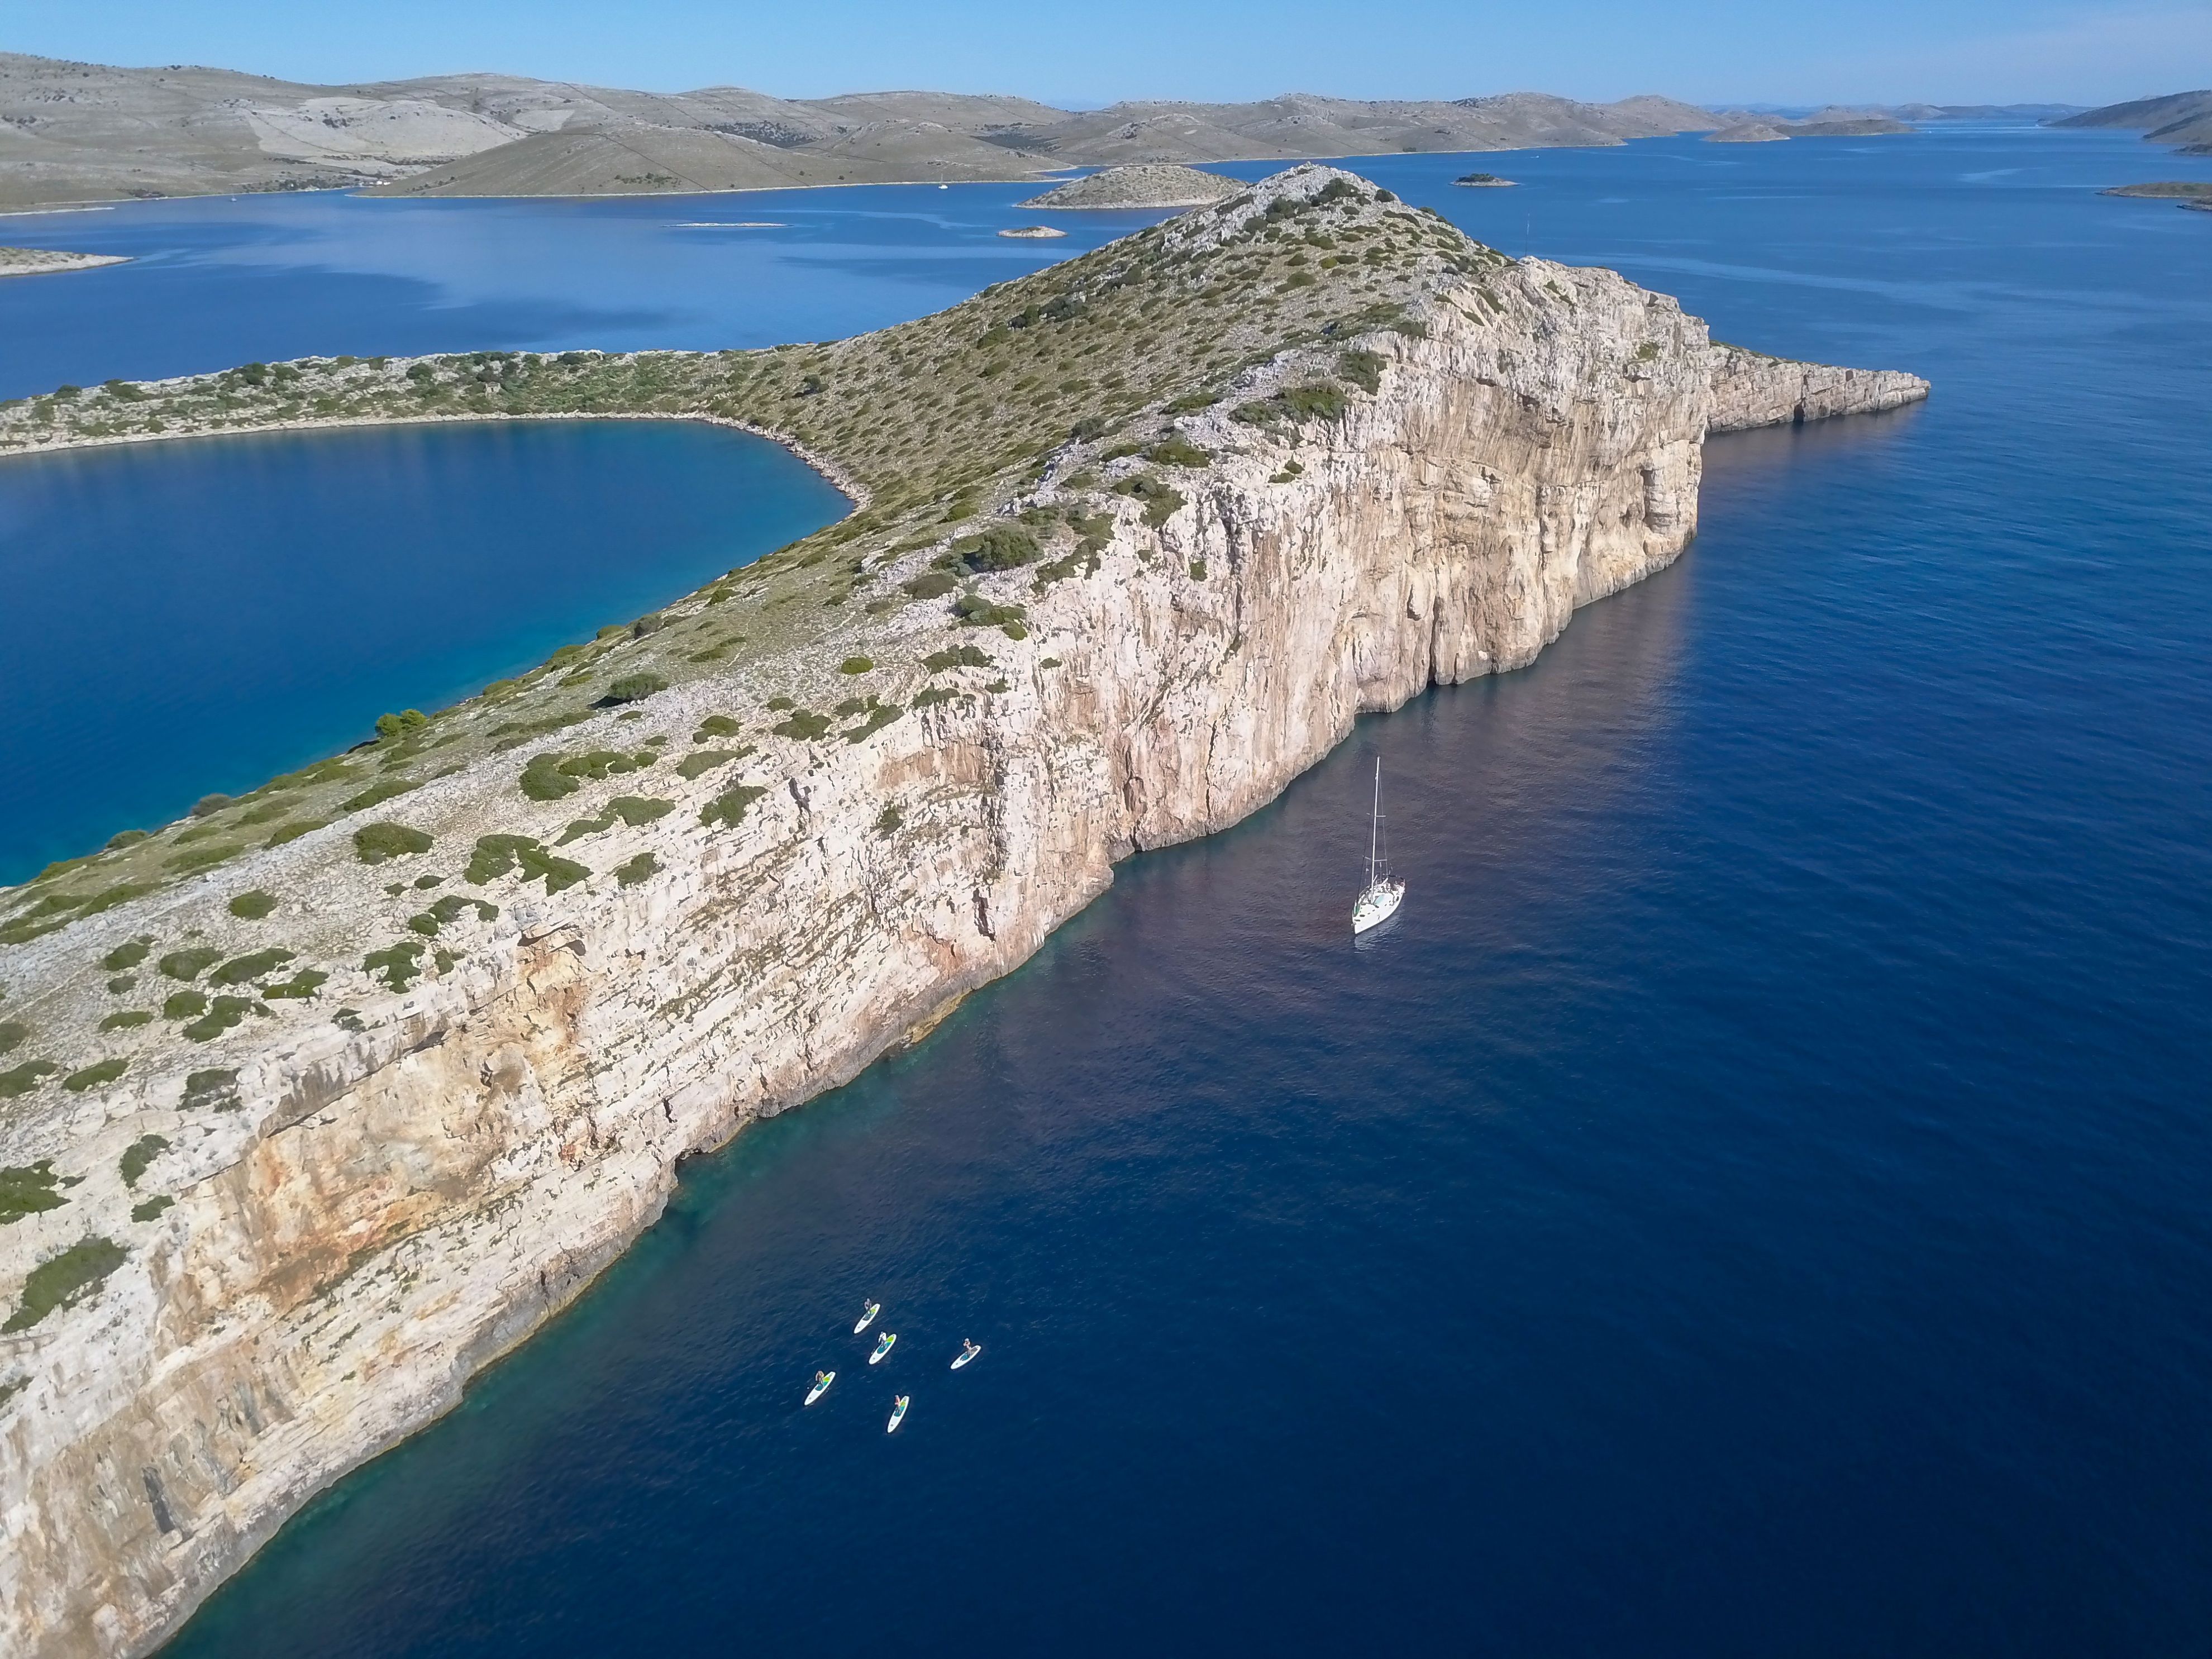 SUP Sailing along the Dalmatian Coast in Croatia.